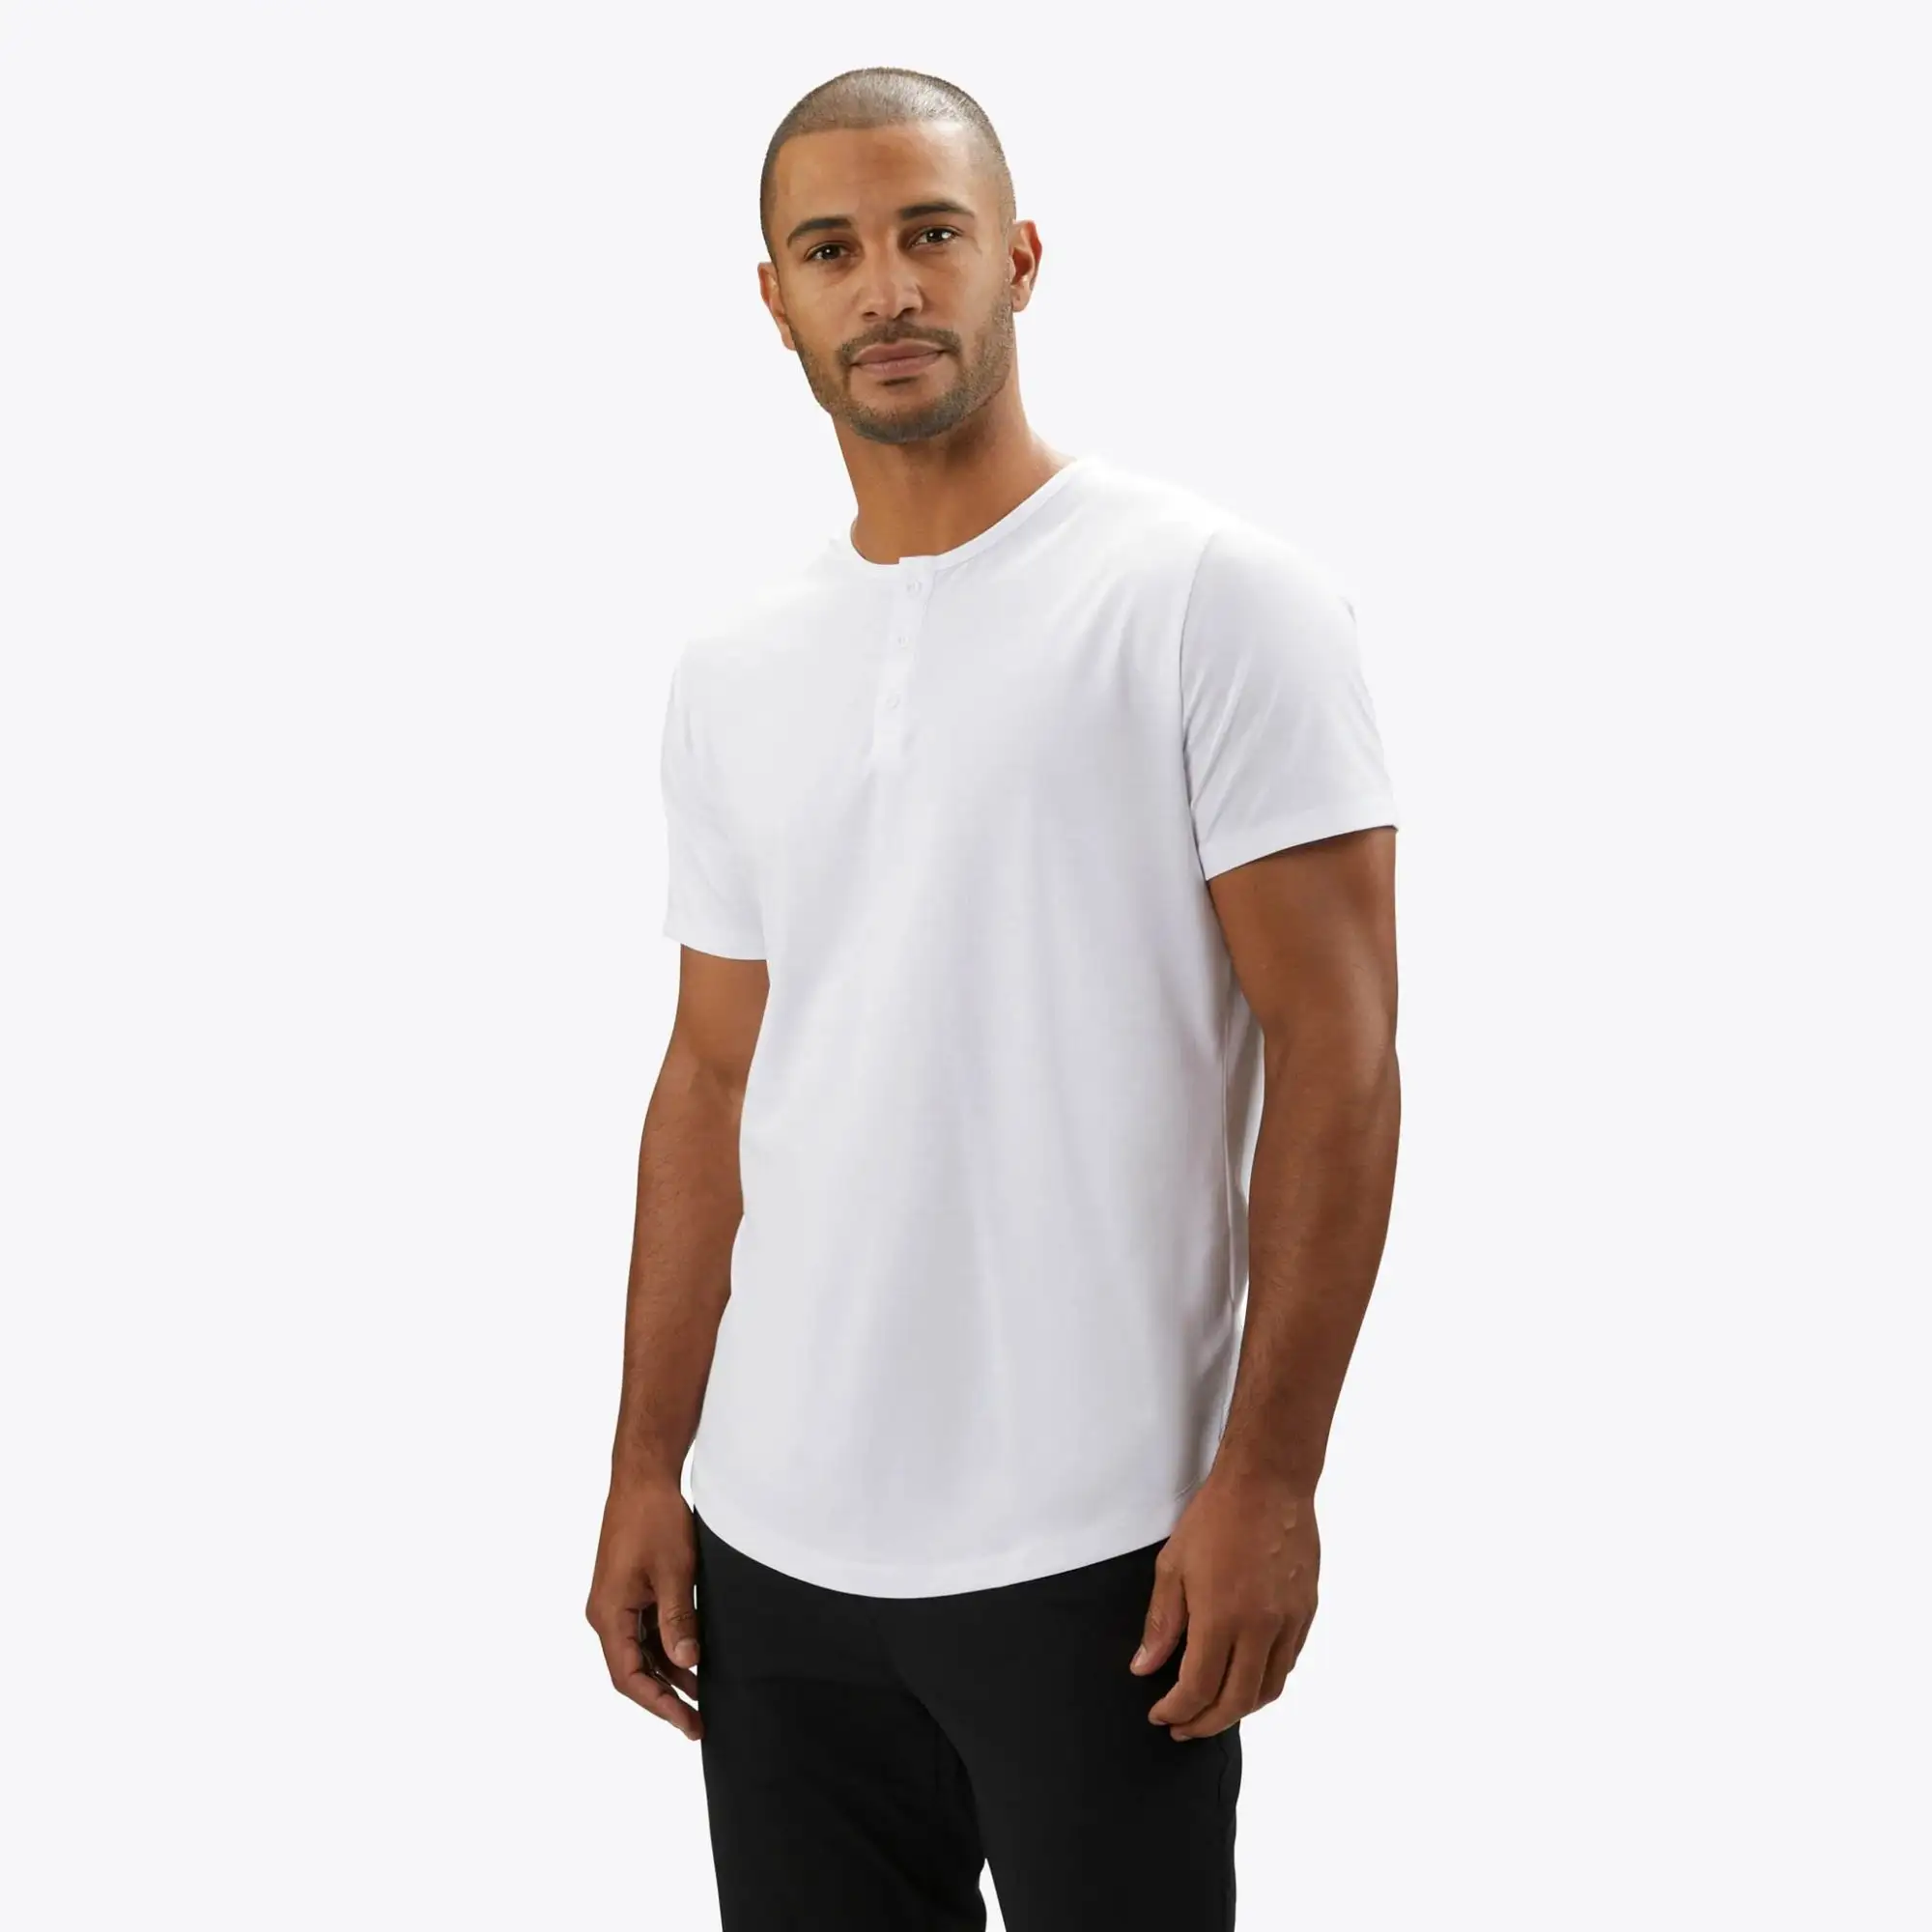 Amazon Bestseller: Dukale's Slim Fit Henley Collar Men's T-Shirt - Scoop Neck, American Sized, Big Size